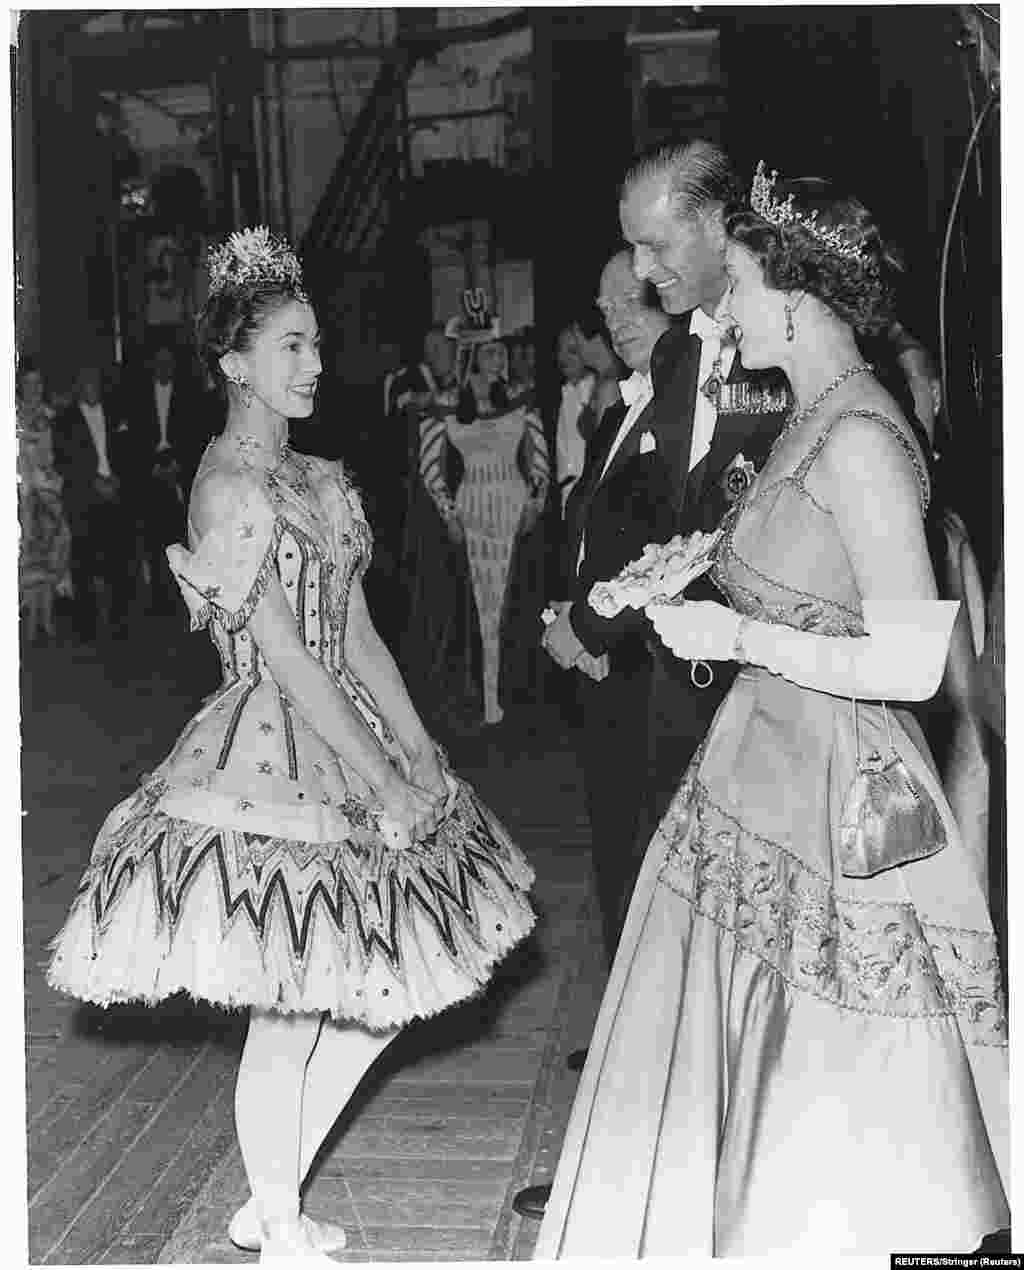 Regina Elisabeta a II-a, Prințul Philip și David Webster discută cu Margot Fonteyn la Gala CG din 10 iunie 1958. REUTERS